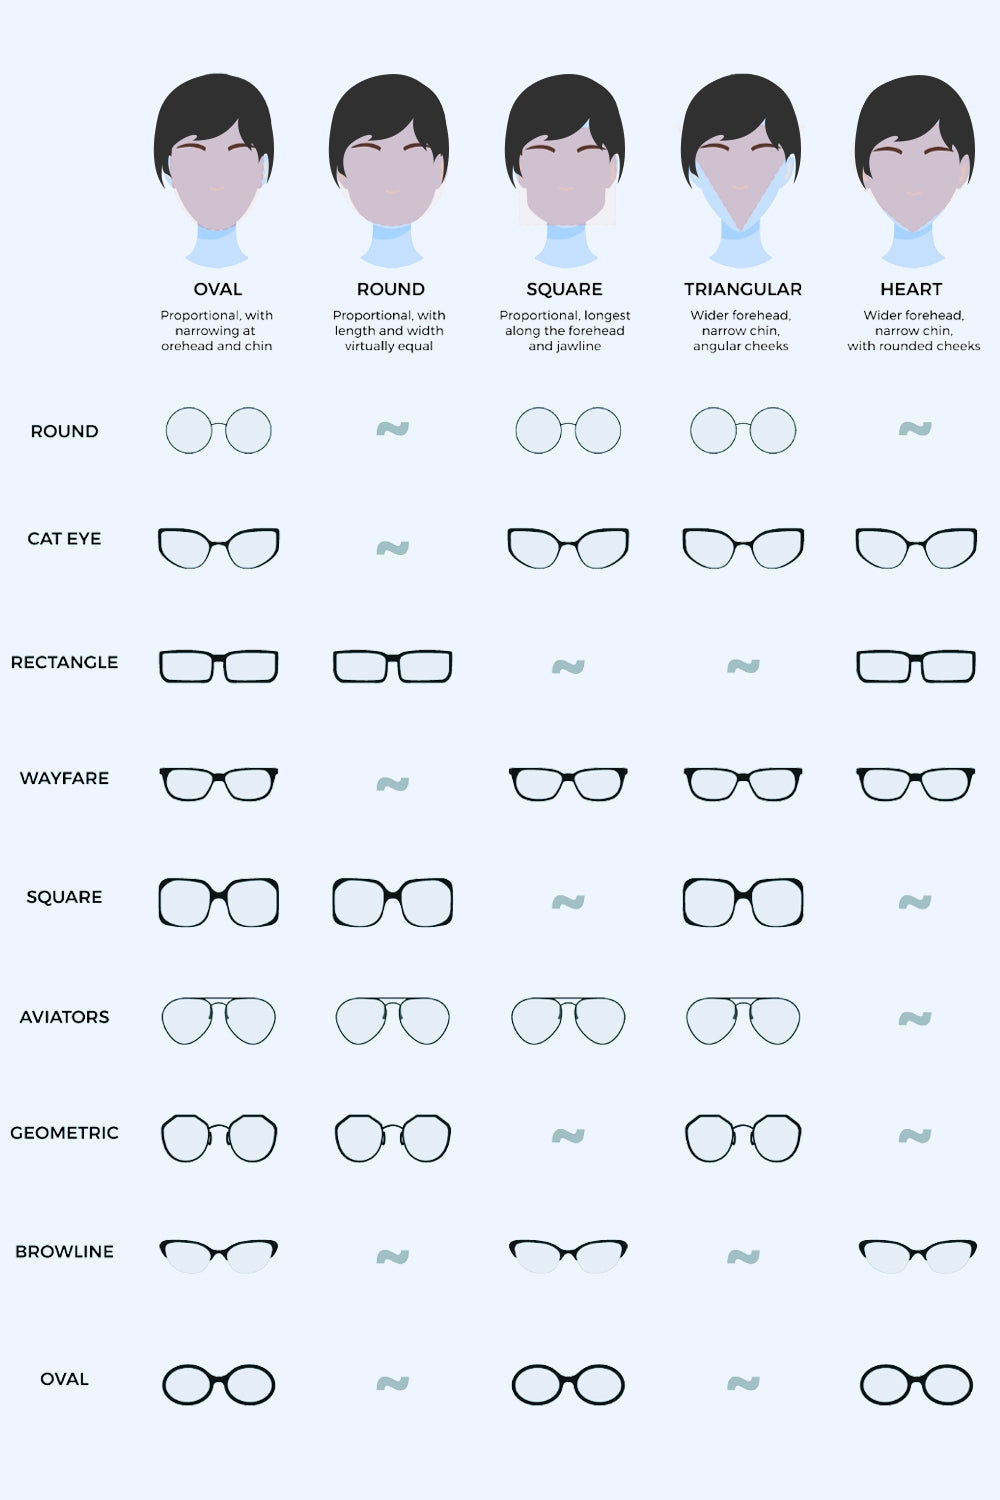 Women’s Glam TAC Polarization Lens Sunglasses